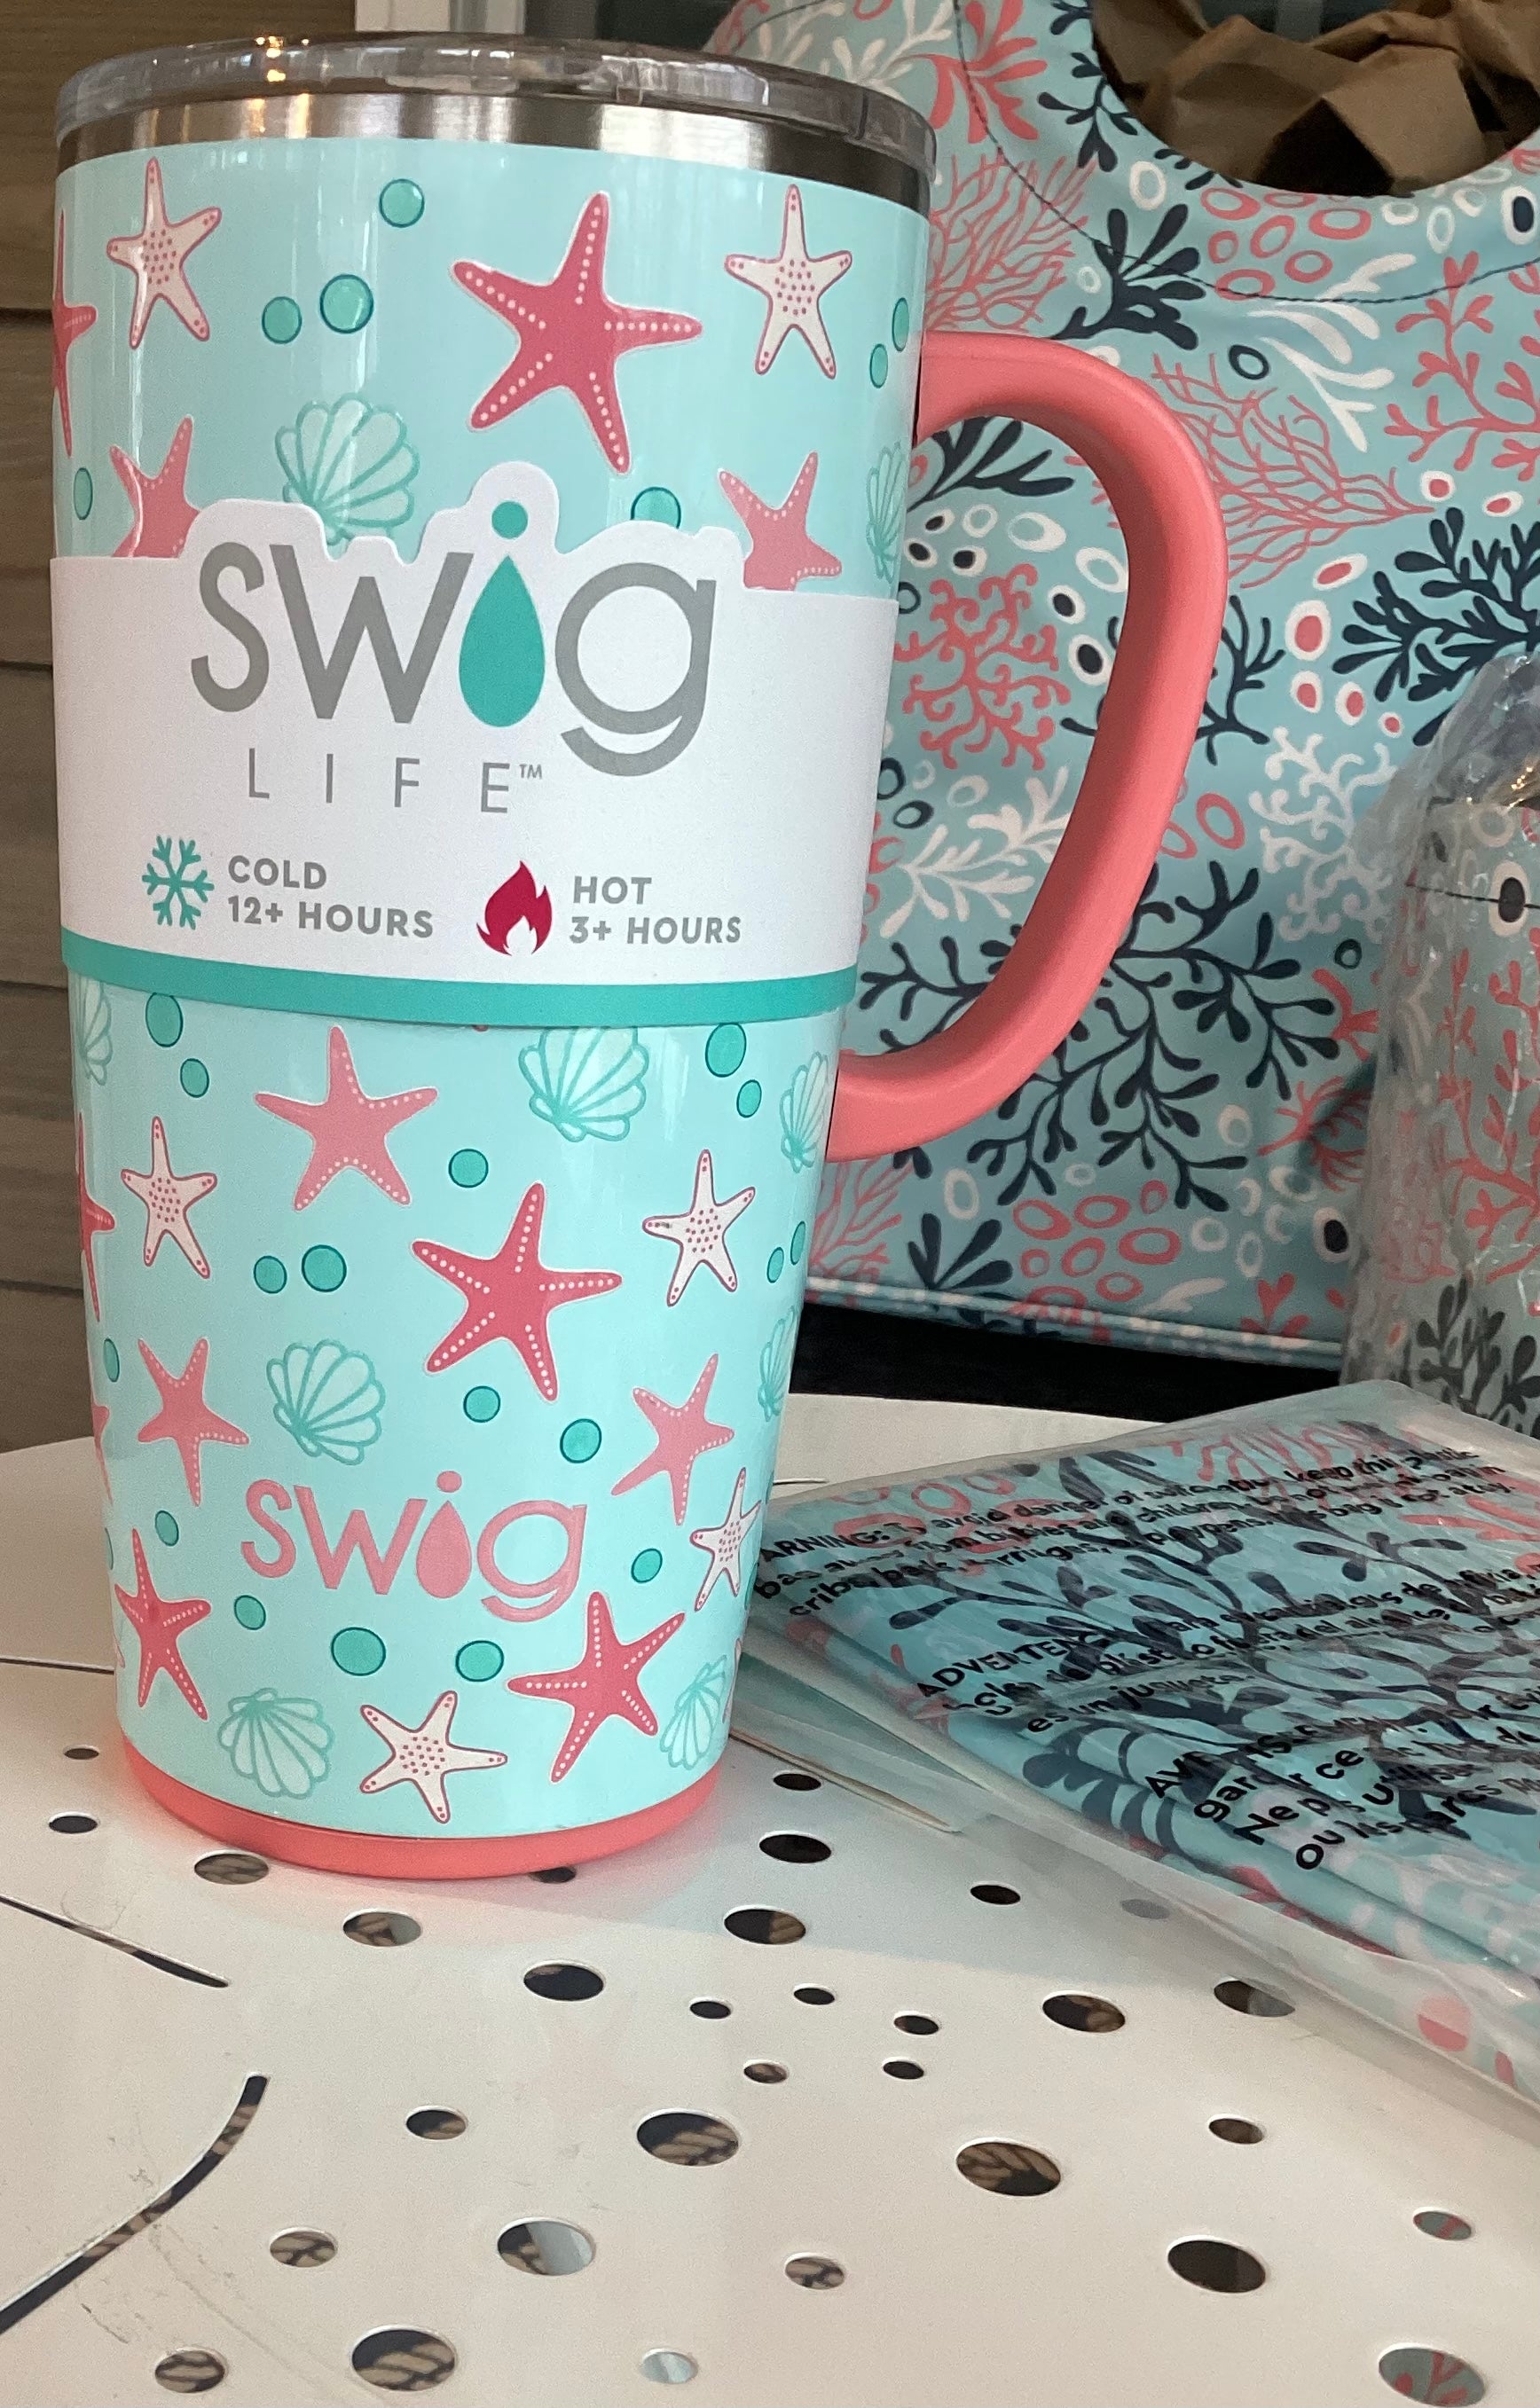 22 oz. Travel Mug by Swig – The Fika Boutique